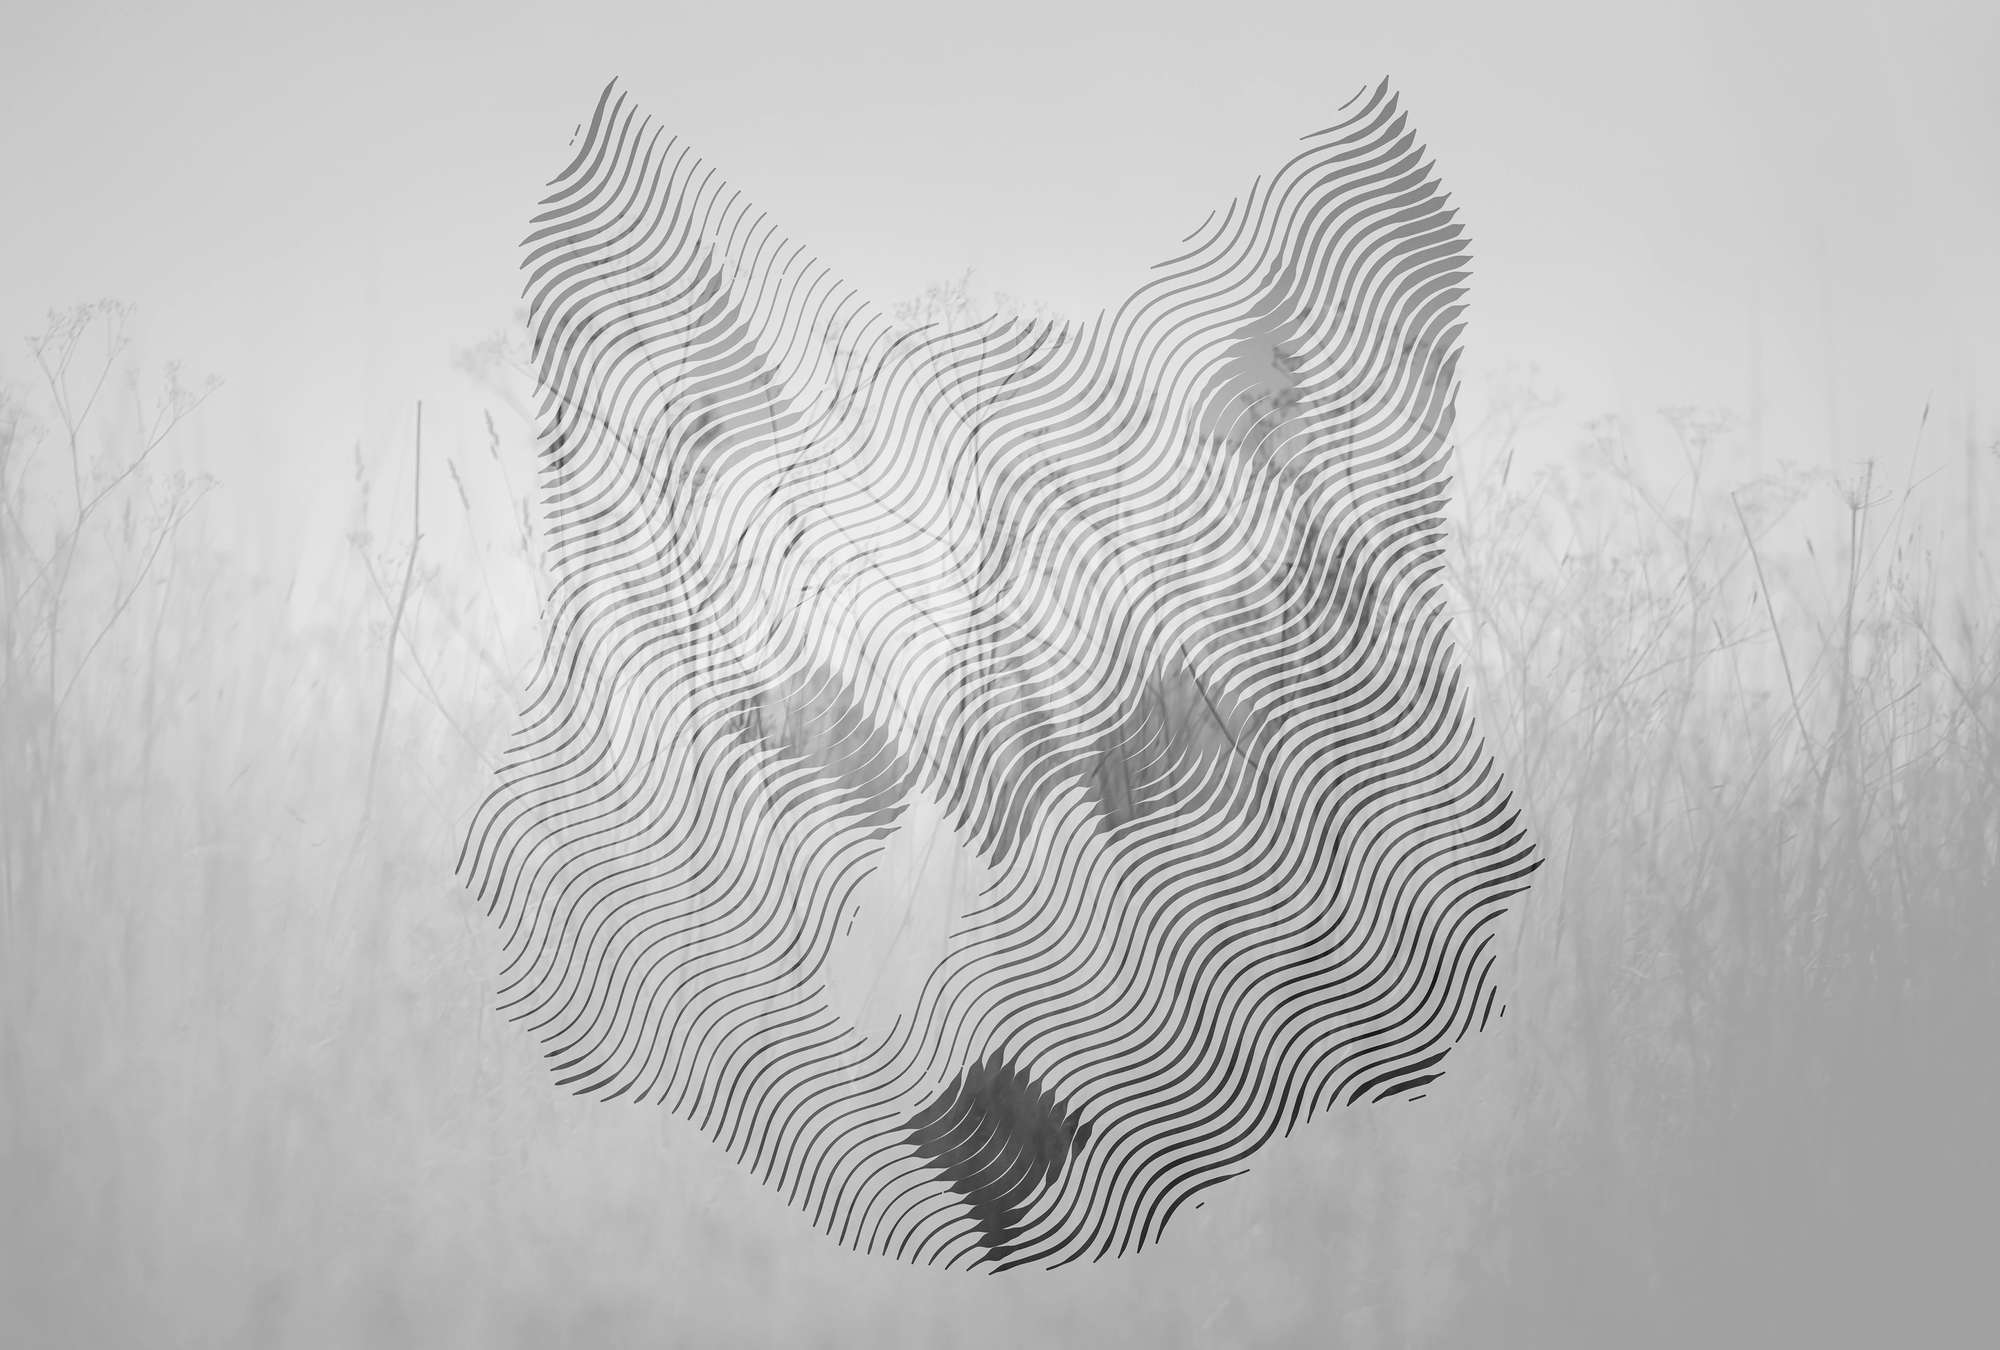             Fotomural Meadow & Fox, mezcla de diseño natural - gris, blanco, negro
        